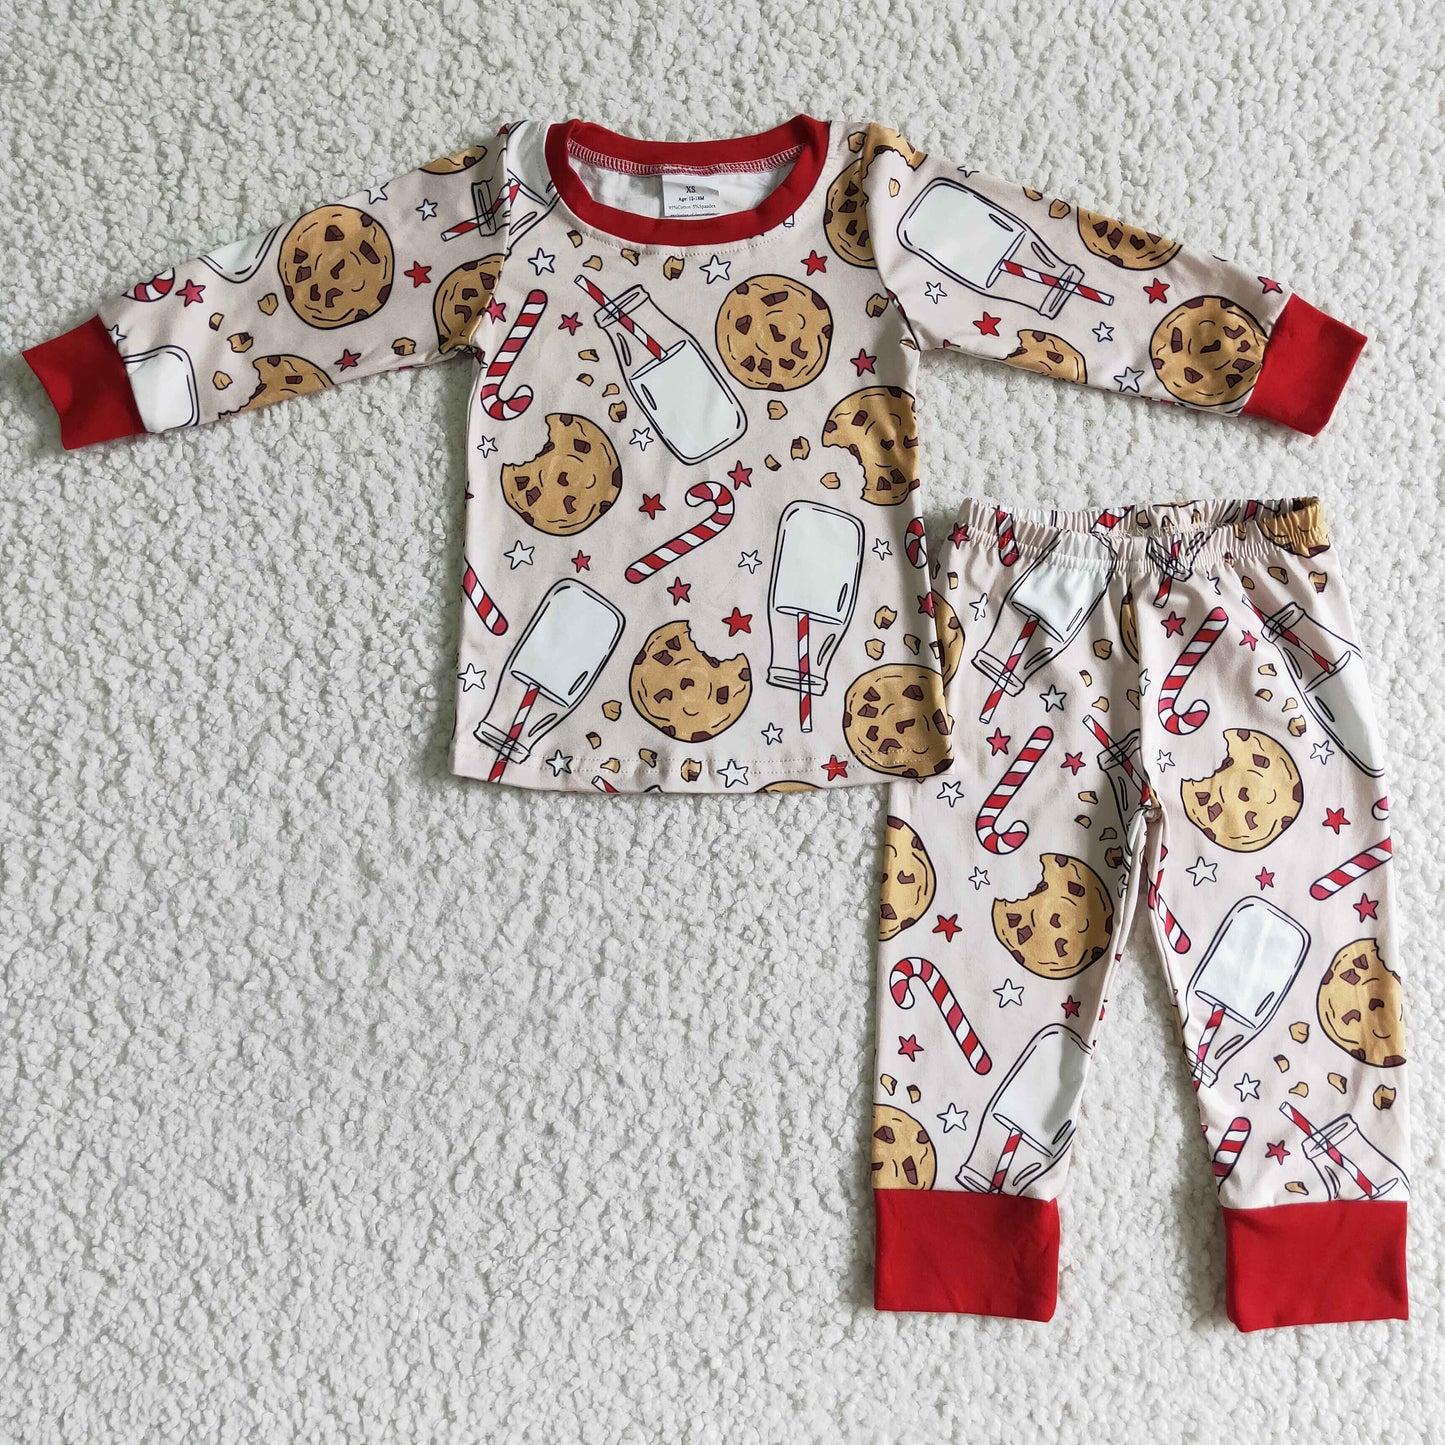 Biscuit milk candy cane print kids Christmas pajamas